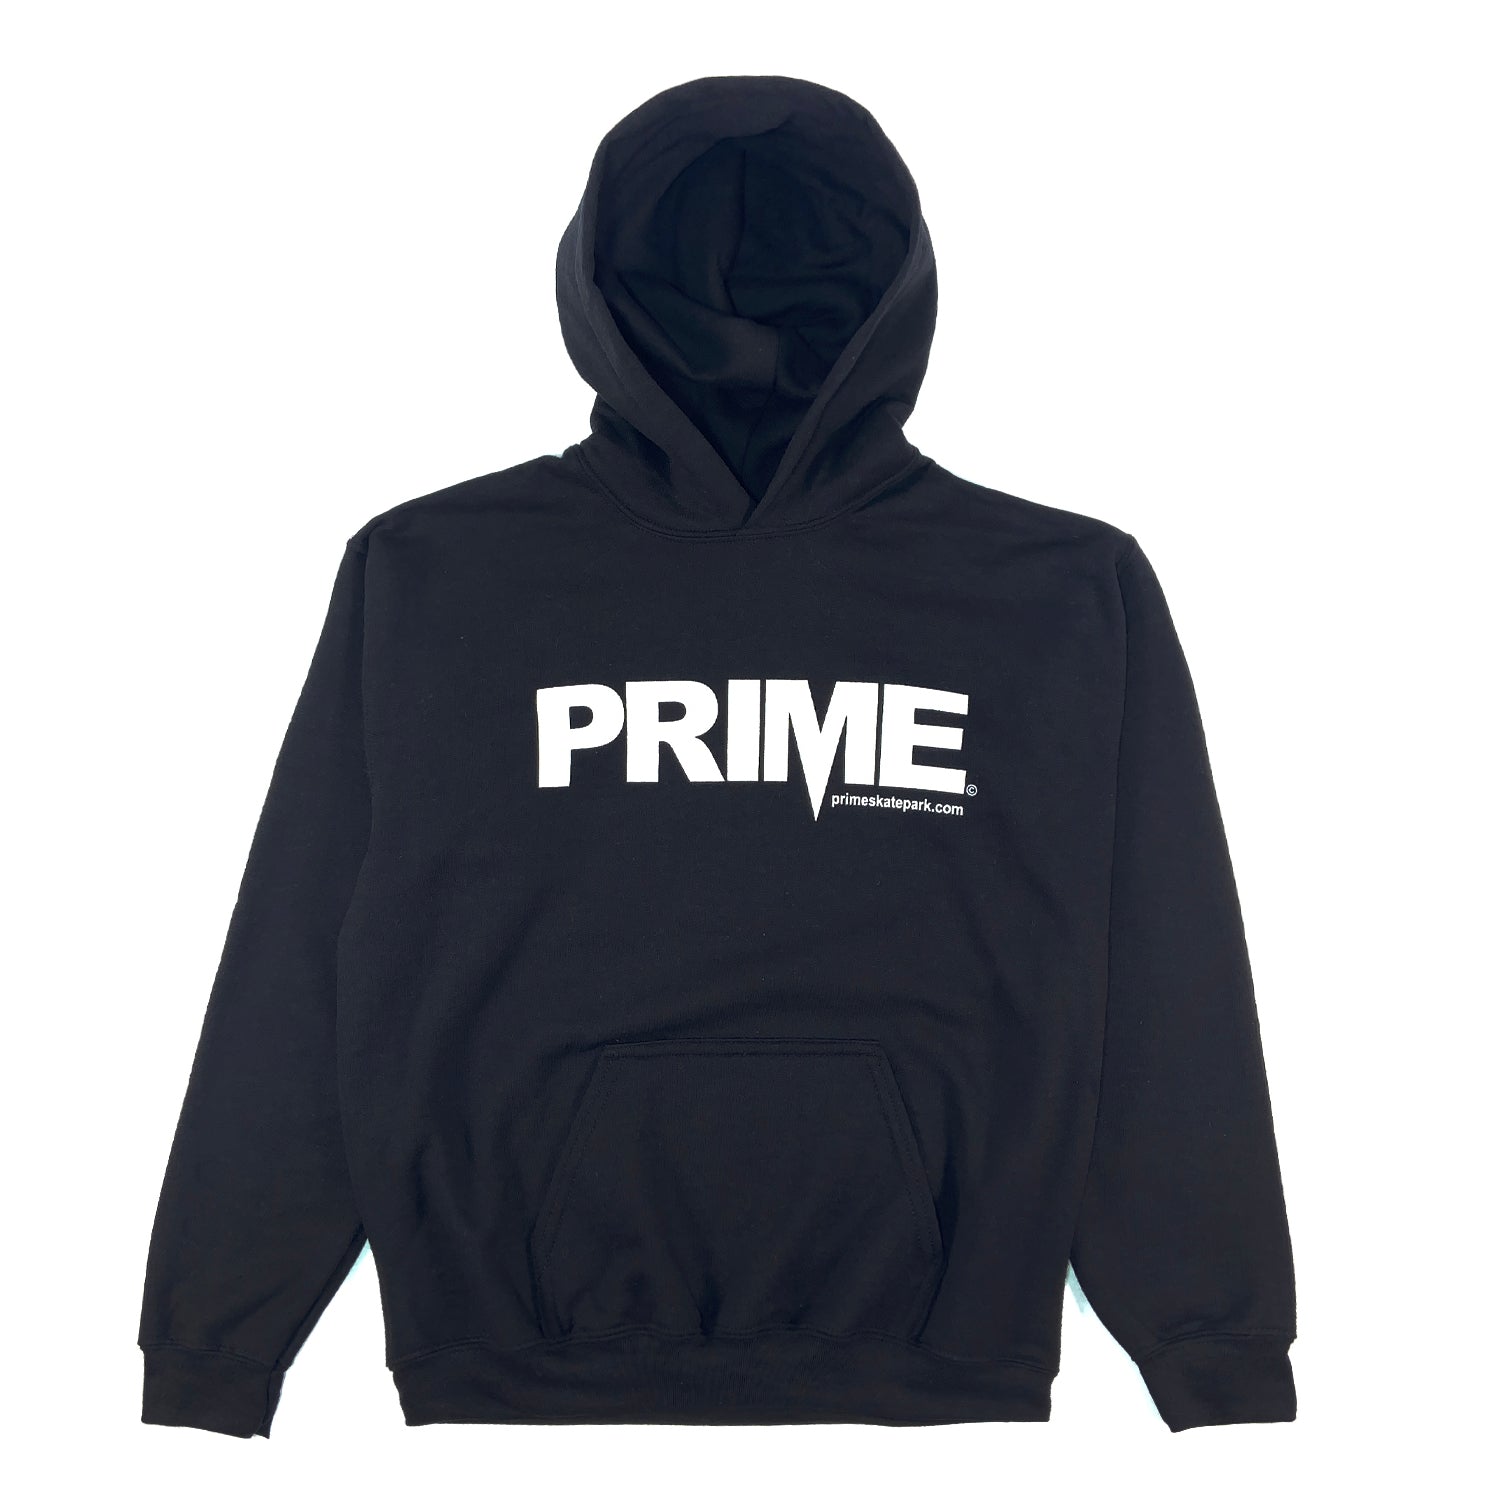 Prime Delux OG Logo Kids Hooded Sweat - Black / White - Prime Delux Store